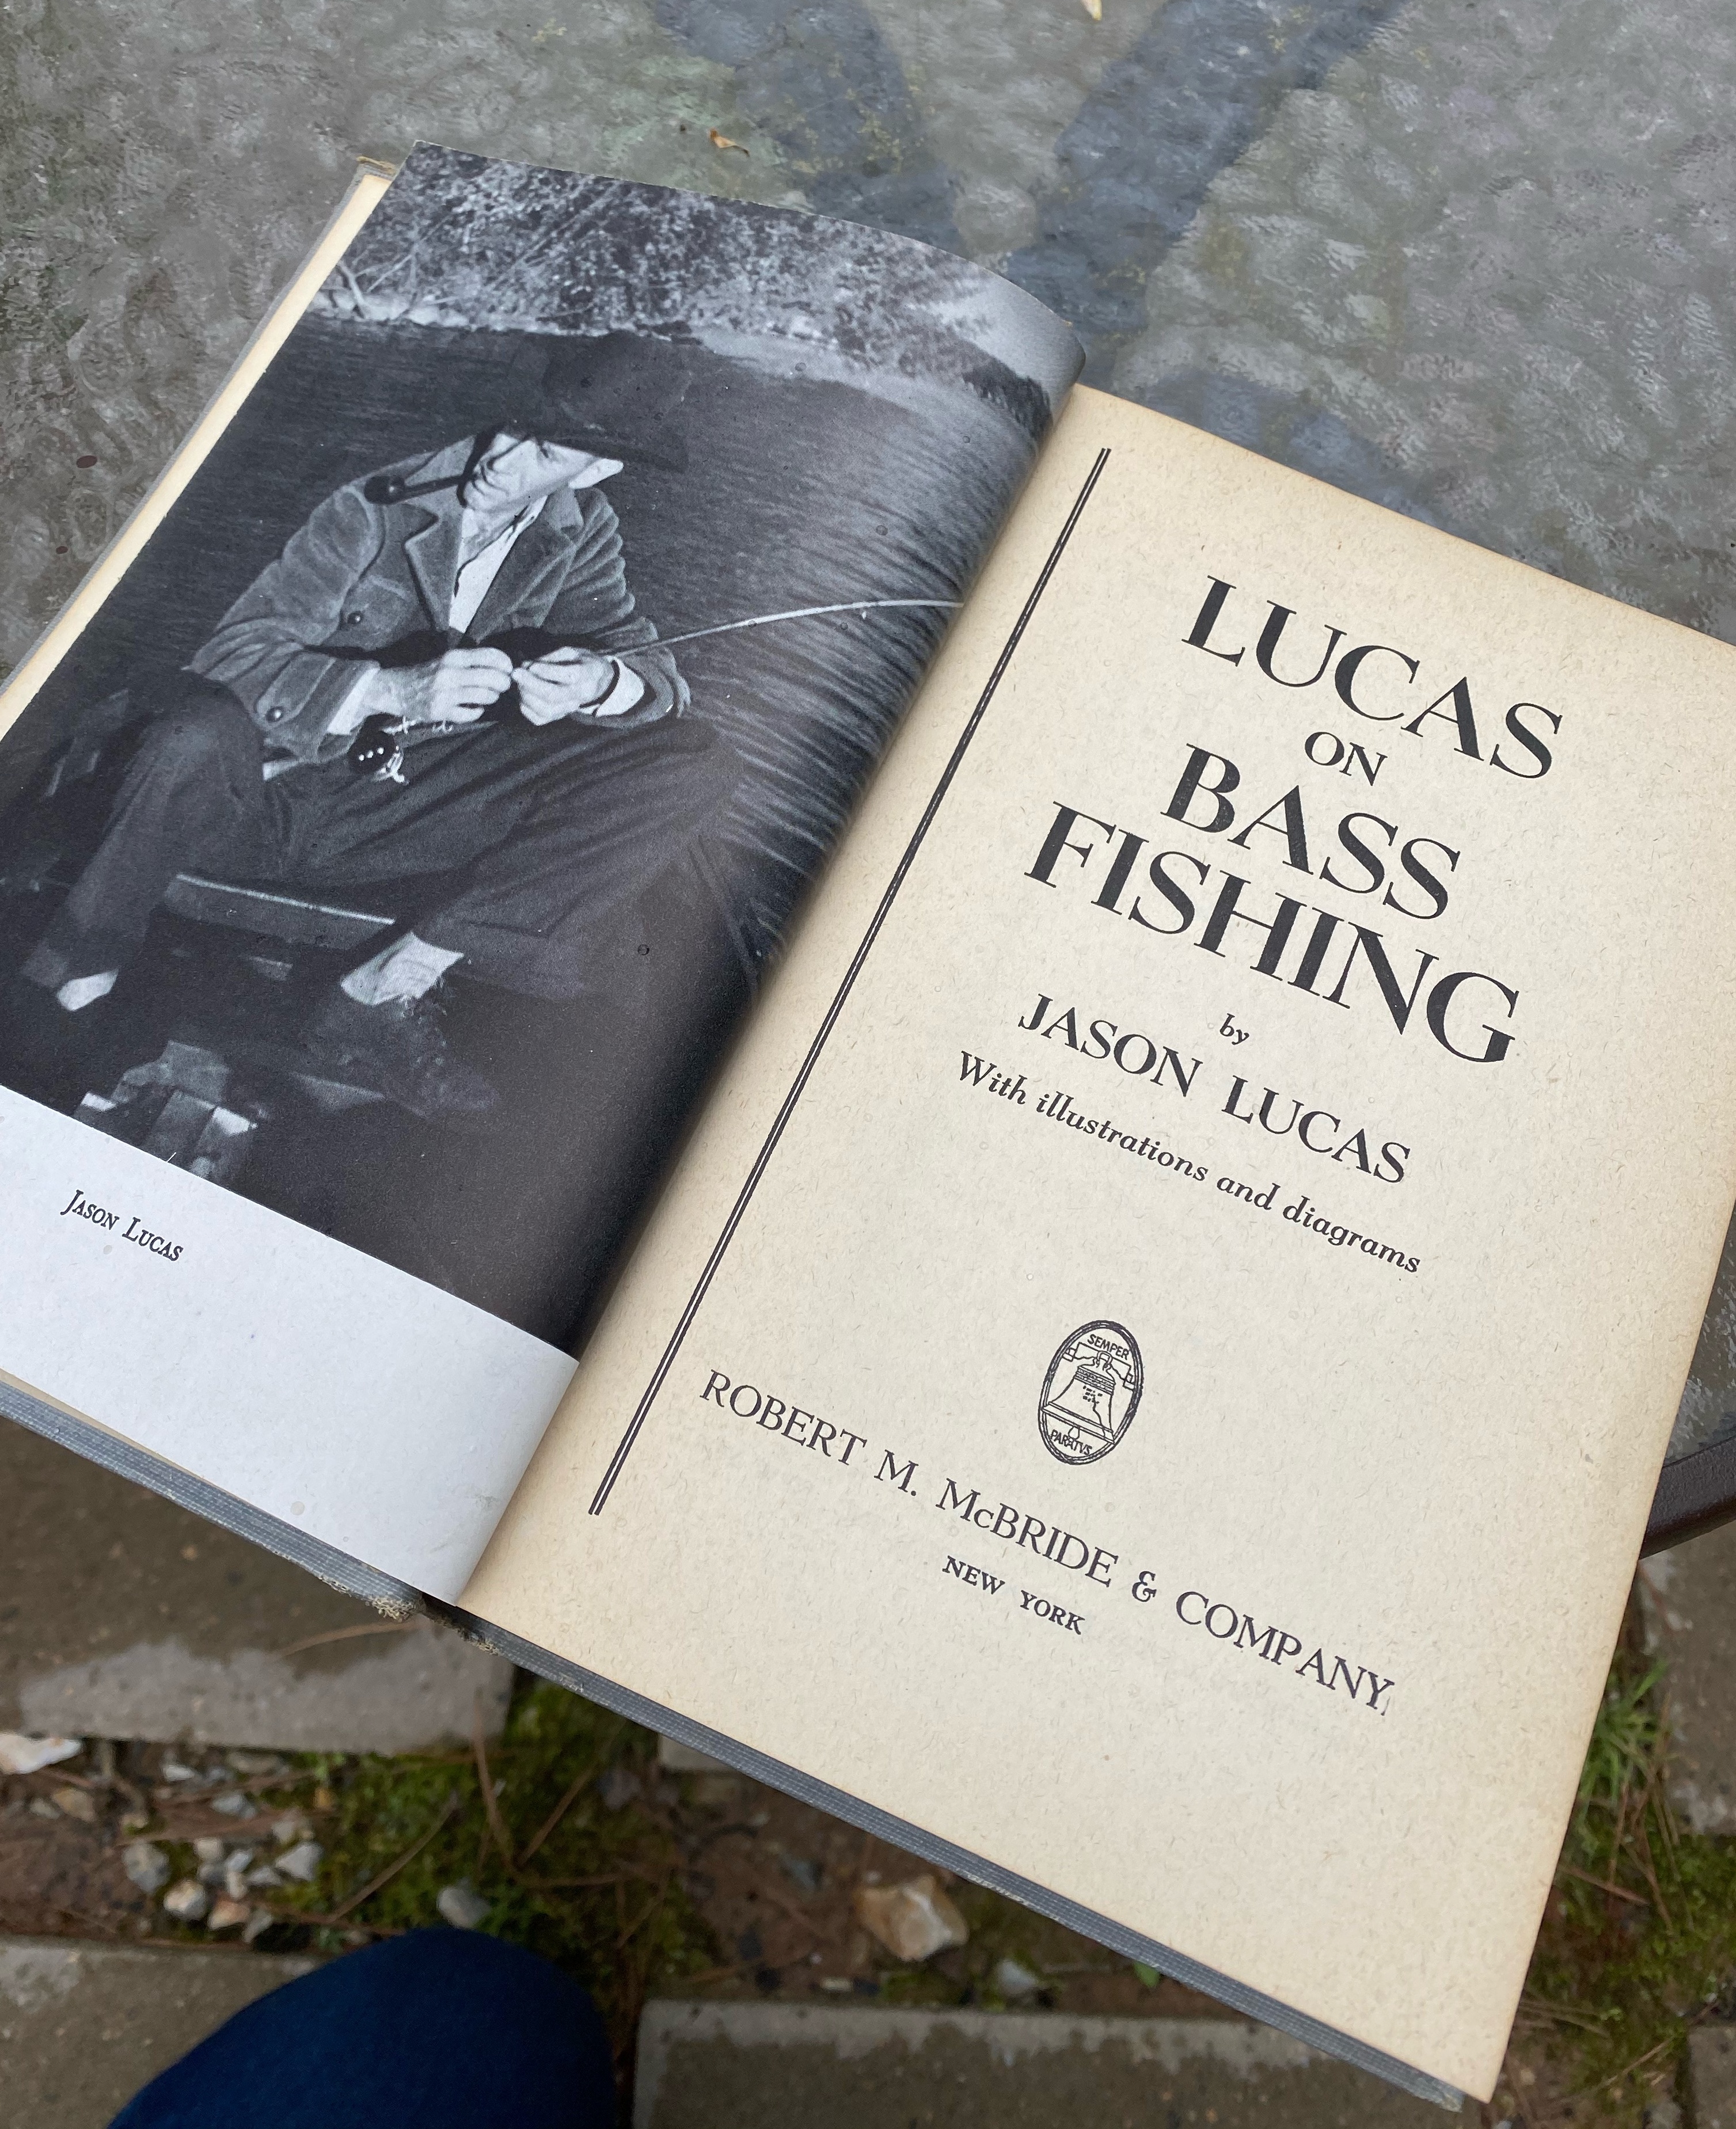 Jason Lucas - The Bass Fishing Hall Of Fame